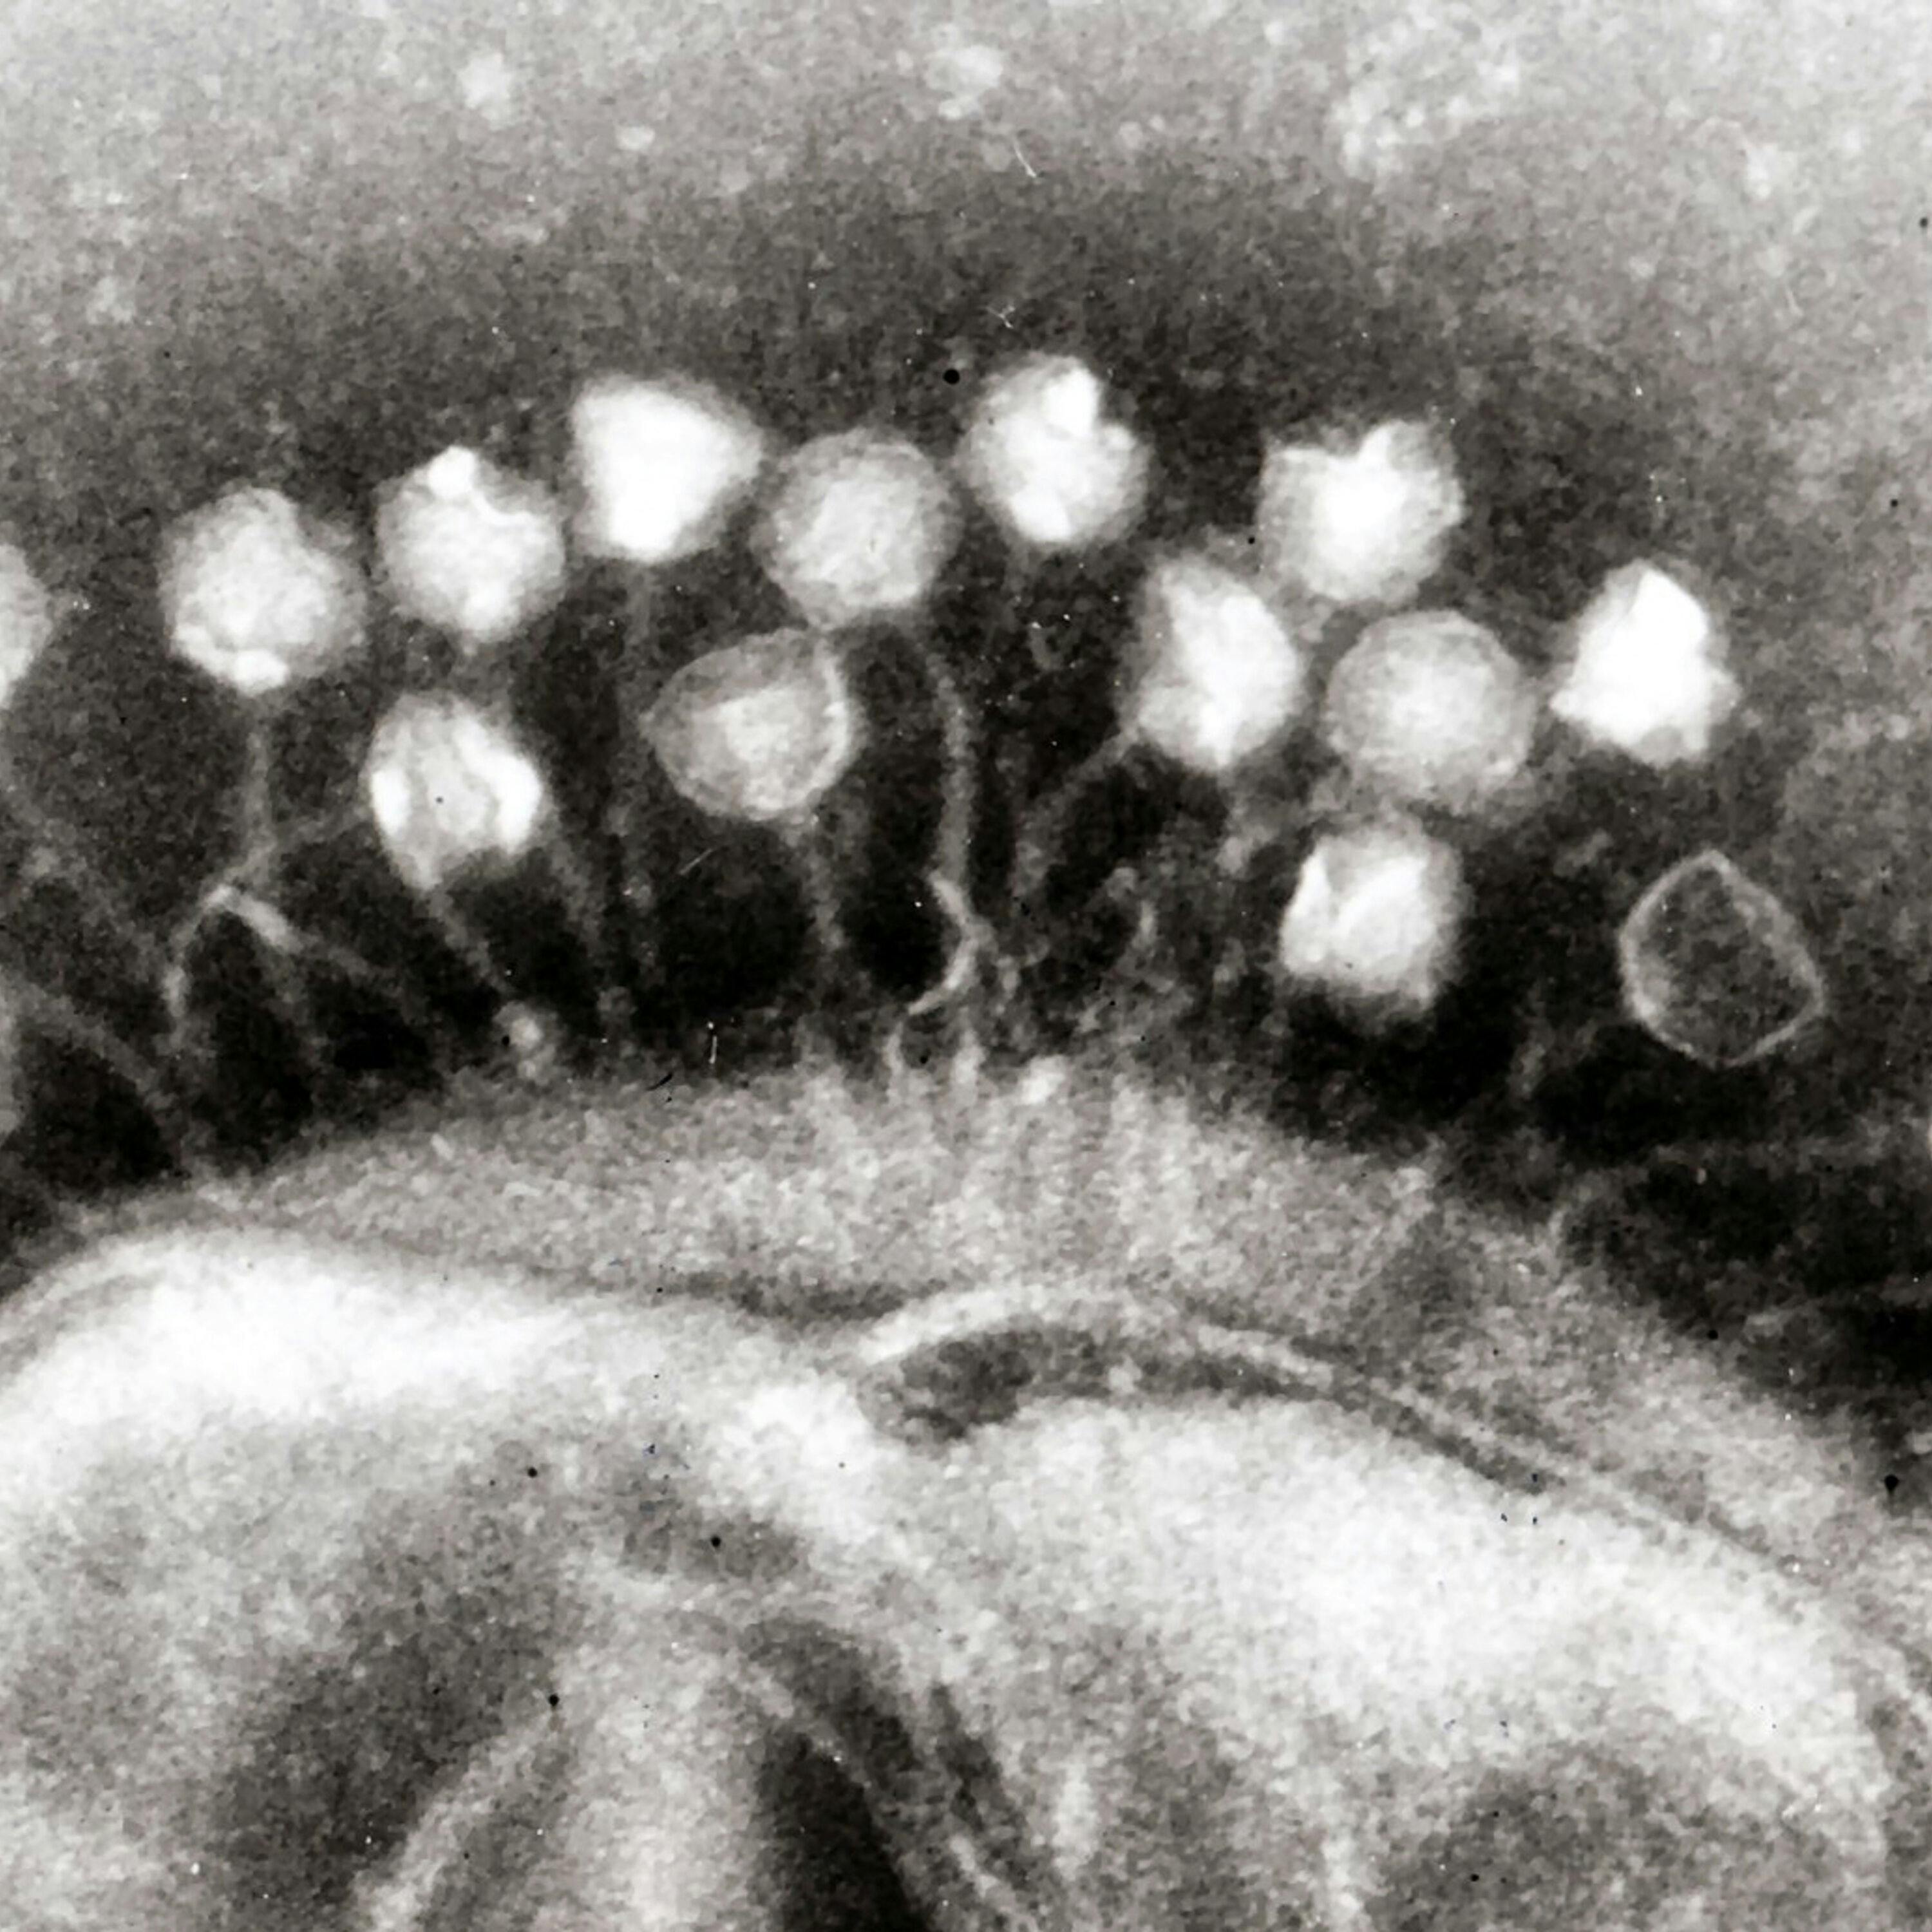 Phage Against the Machine